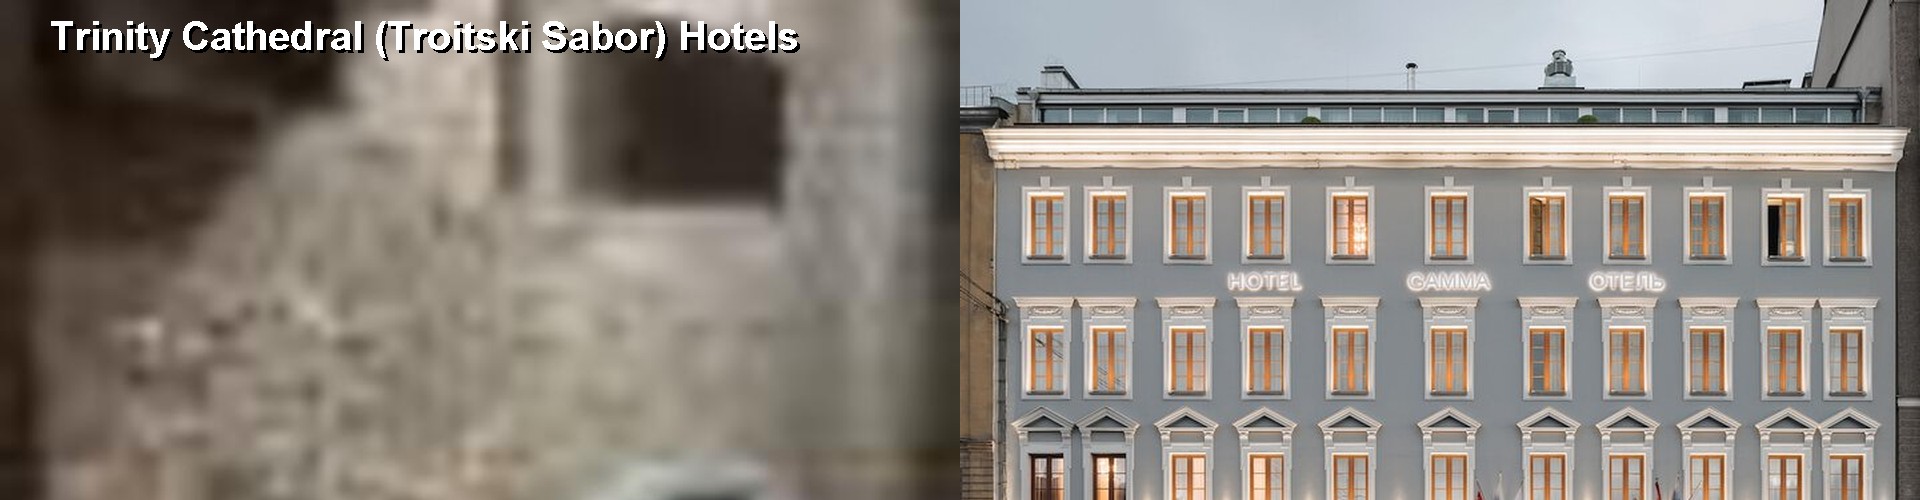 5 Best Hotels near Trinity Cathedral (Troitski Sabor)